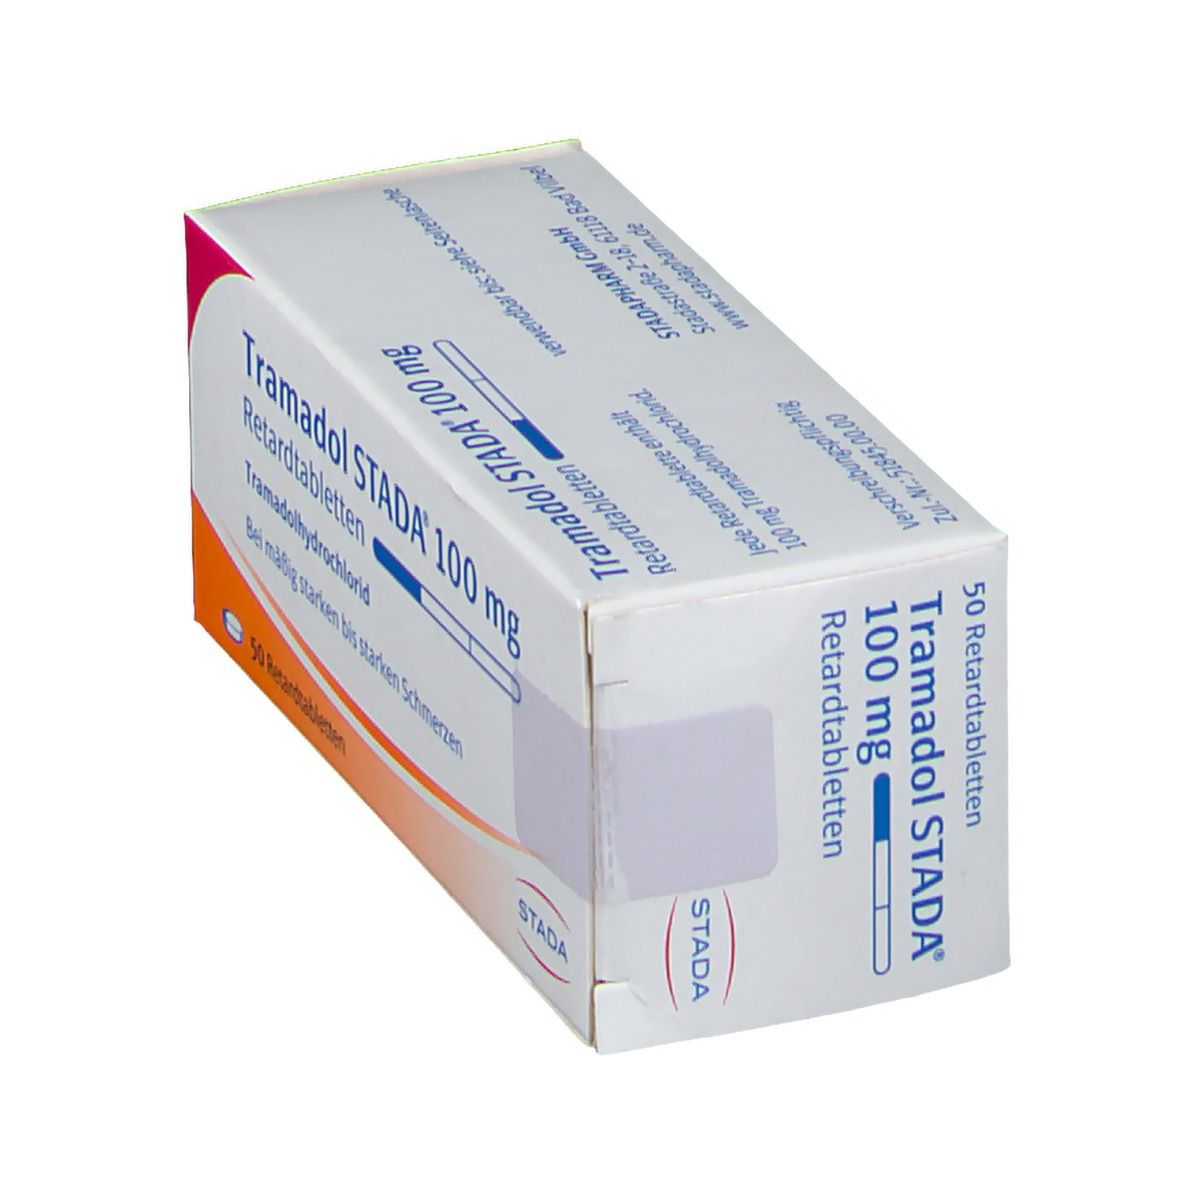 Tramadol STADA® 100 mg